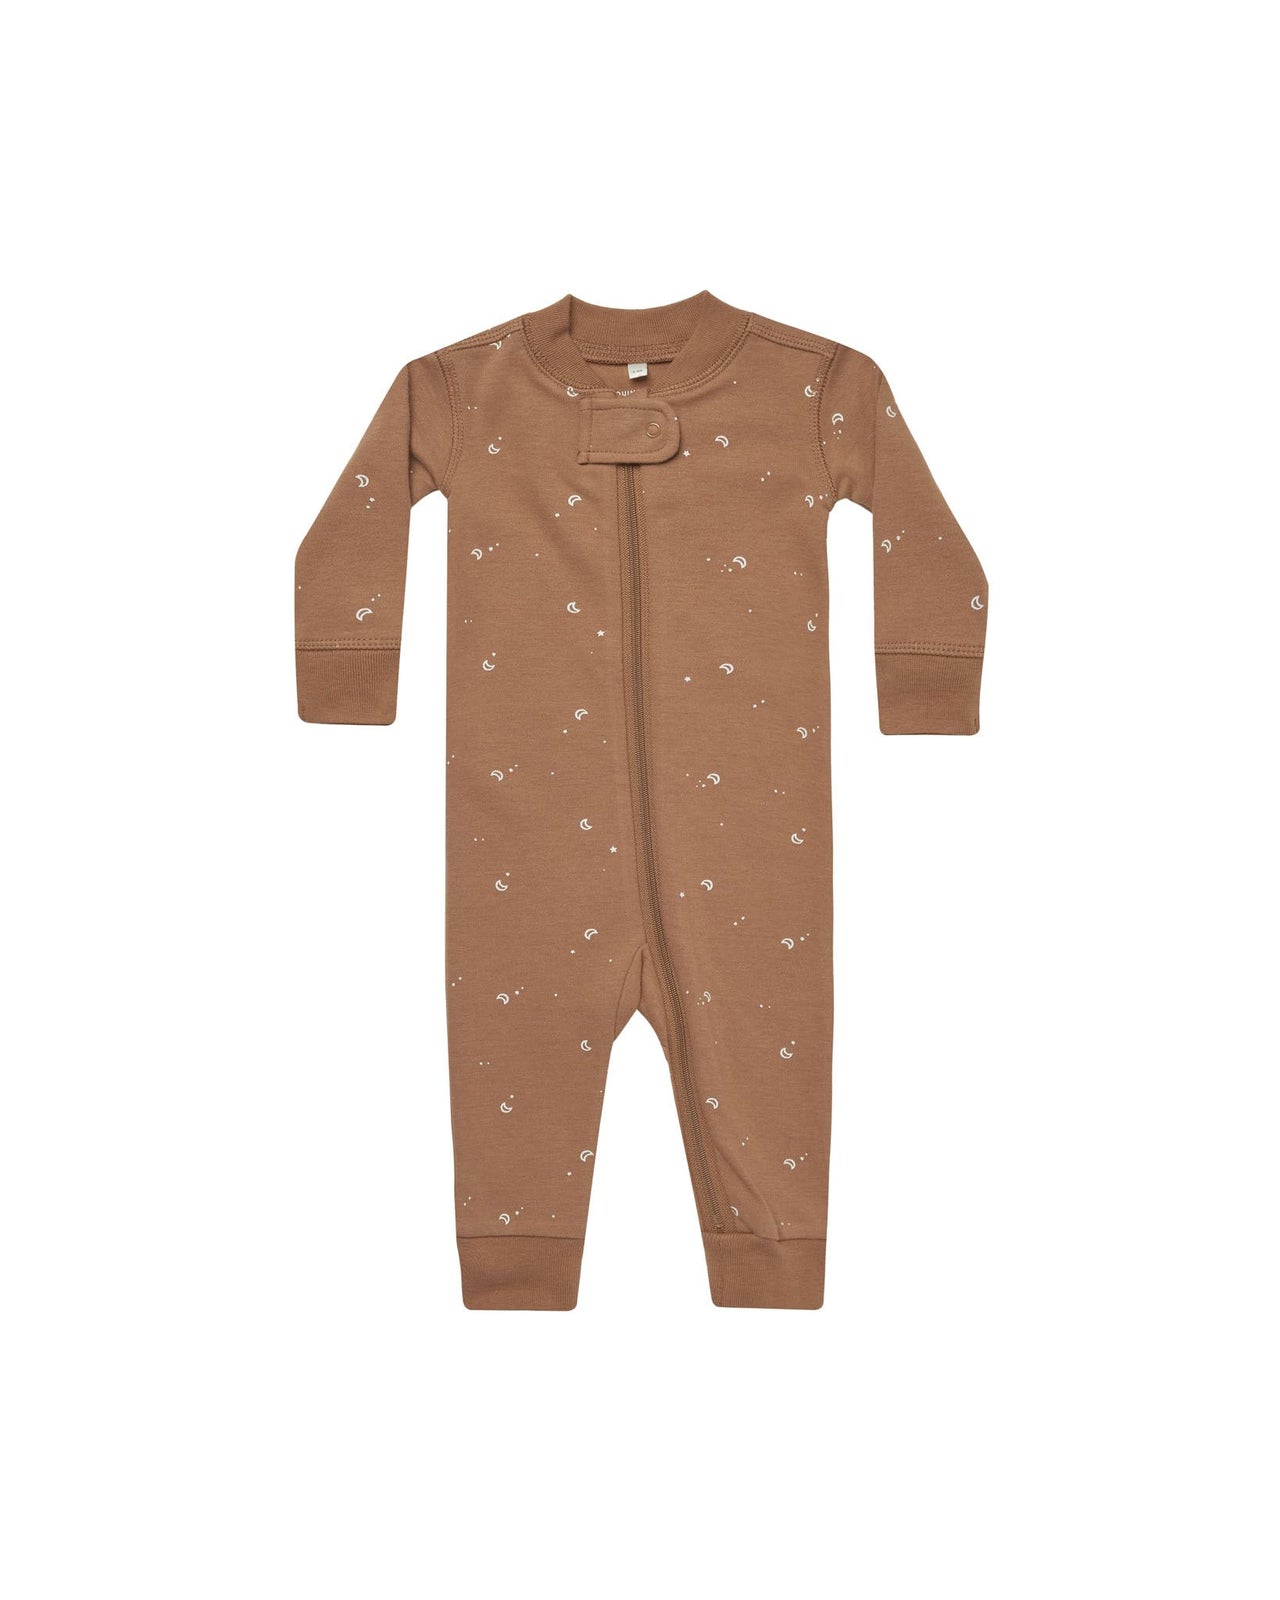 Sleepwear for Baby Boy - Organic Footies, Pajamas, Basics – Wild Ivy